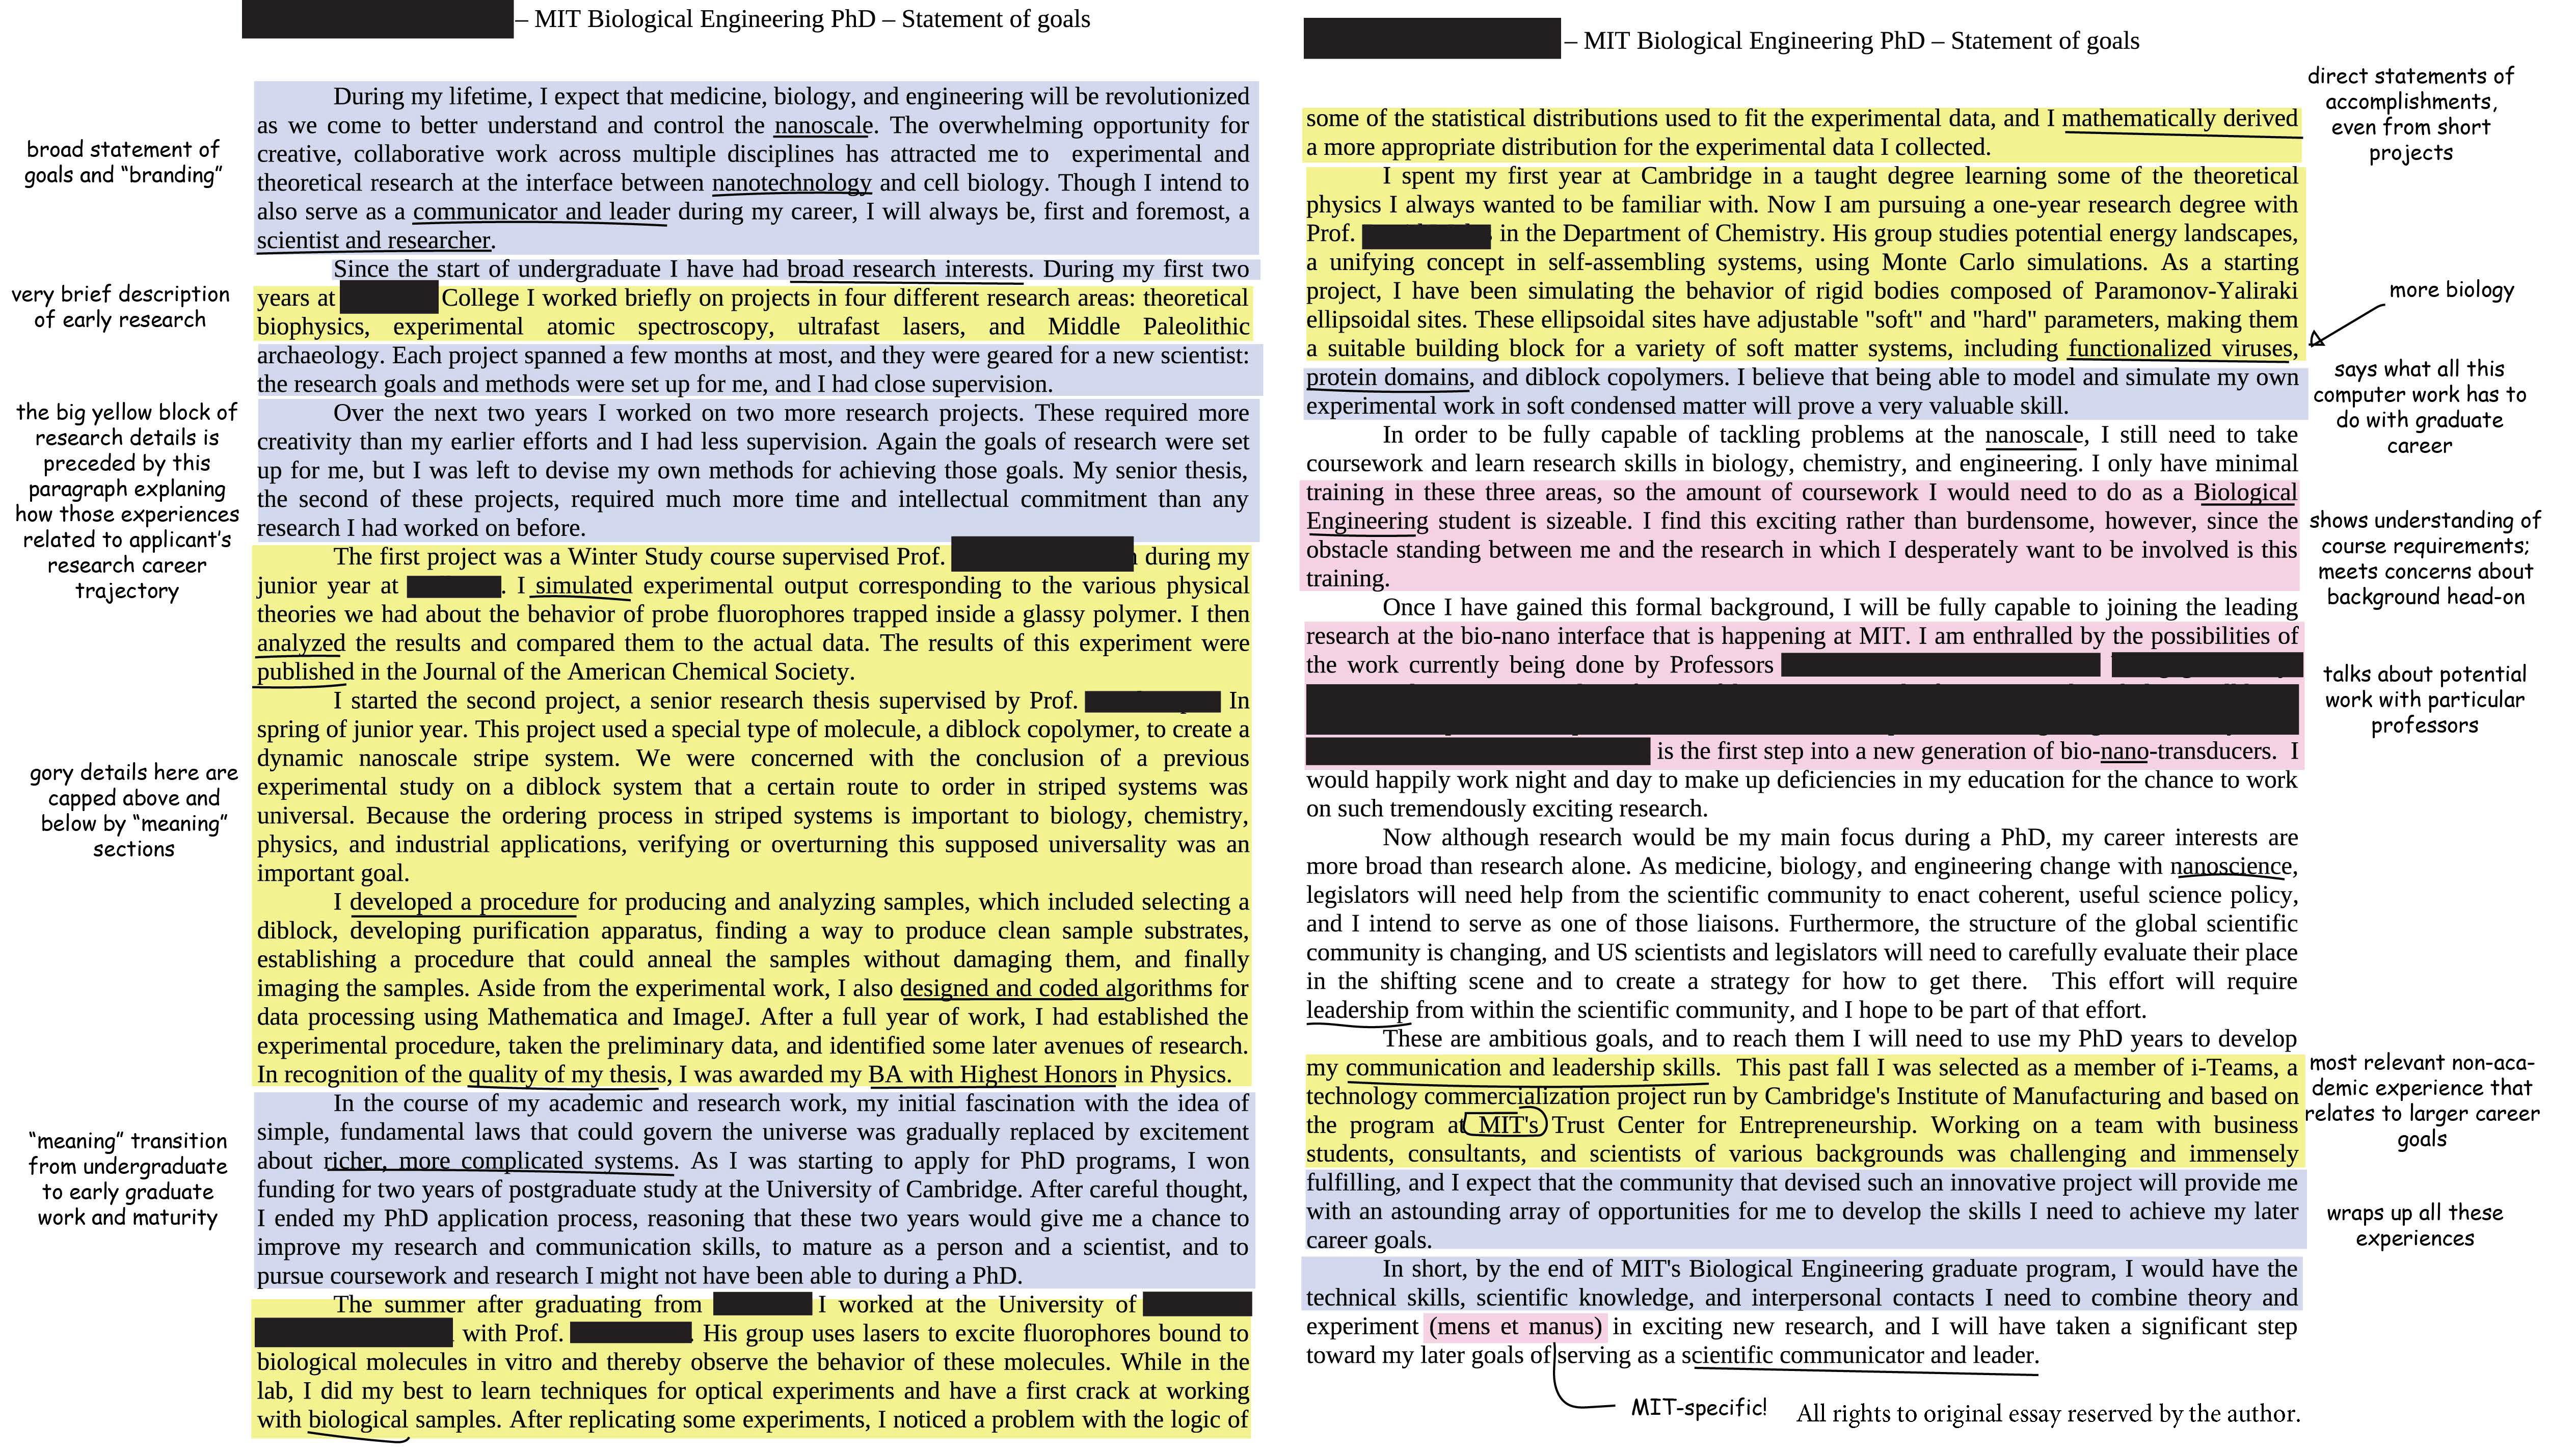 personal statement for graduate school sample essays pdf